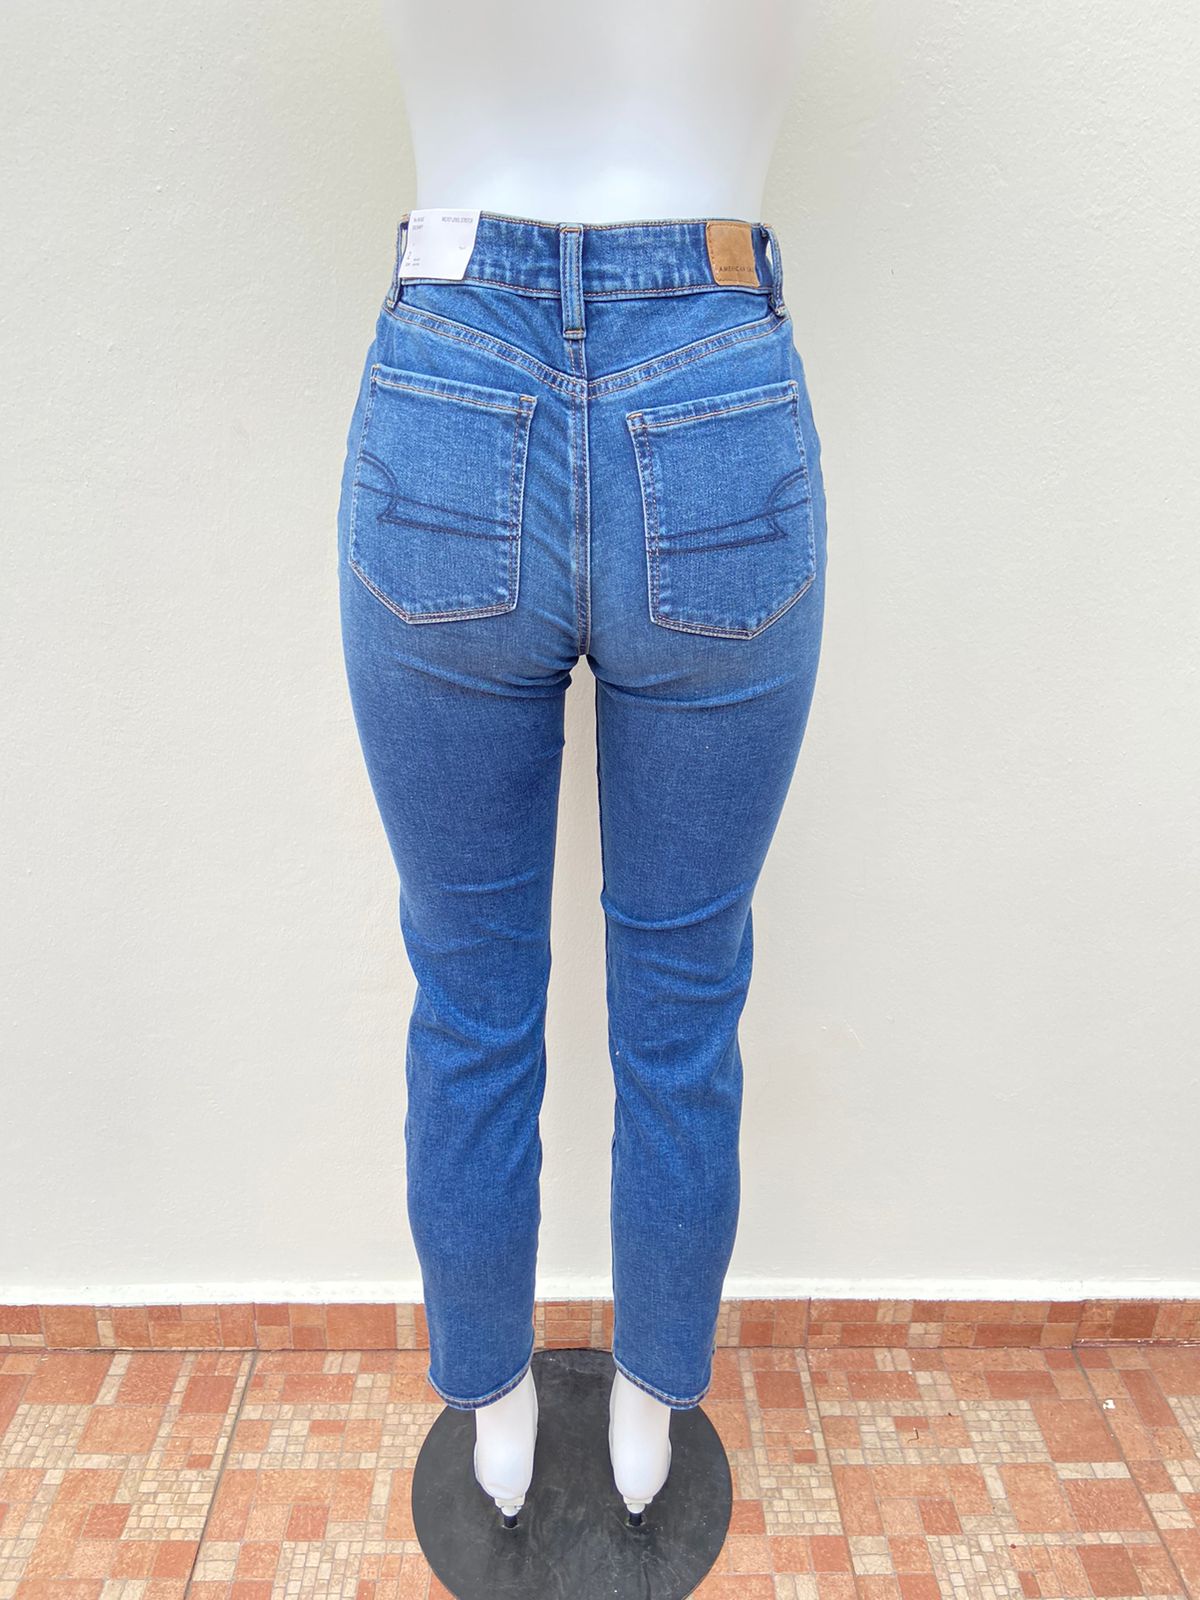 Pantalon jeans American Eagle original azul claro liso NEXT LEVEL STRETCH REGULAR HIGH RISE SKINNY